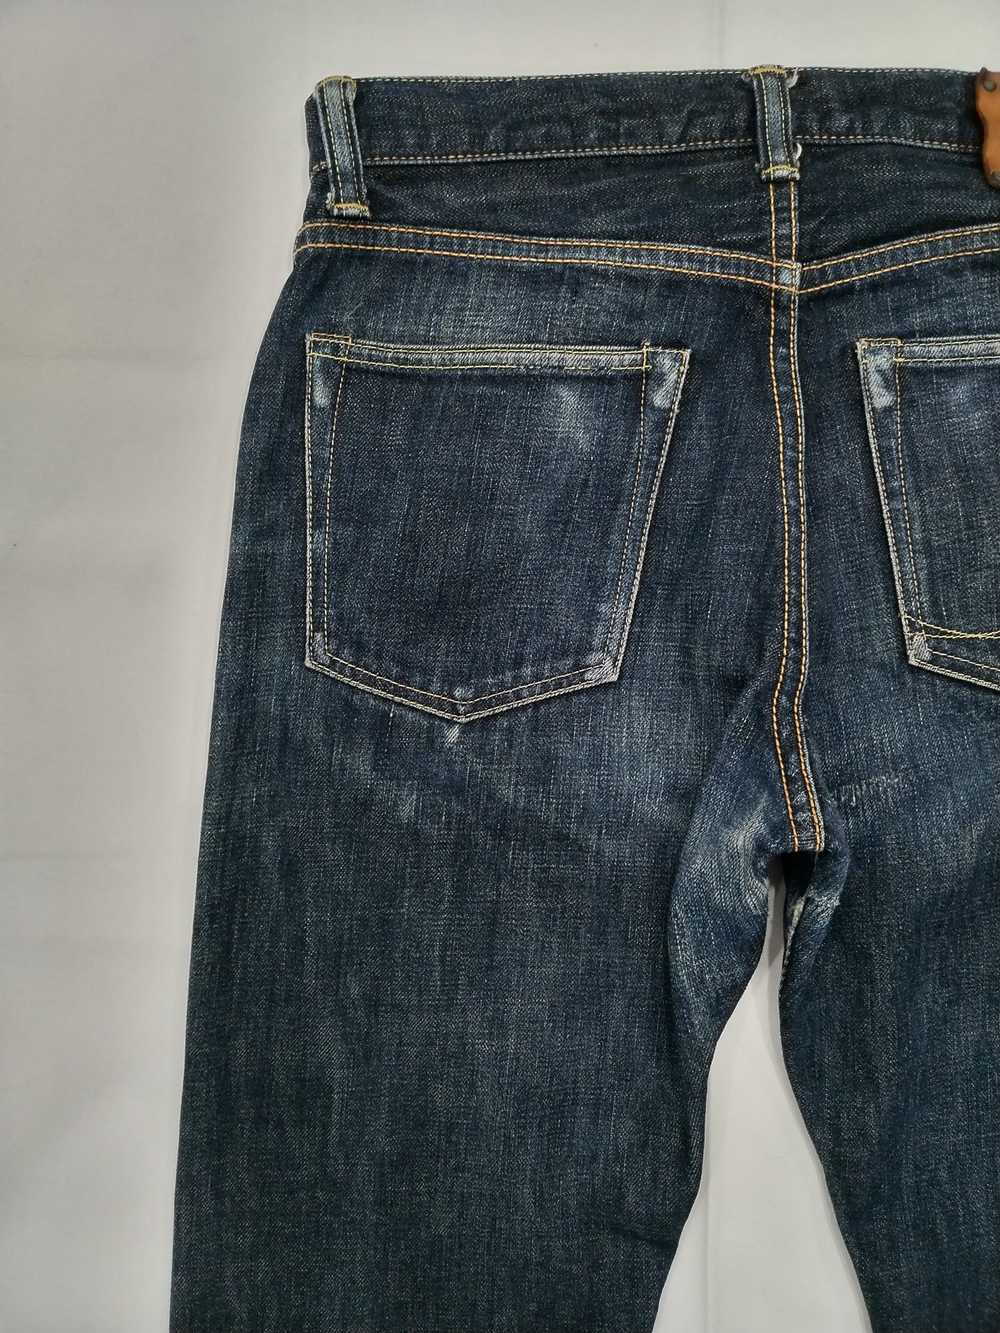 Japanese Brand × Momotaro Momotaro Selvedge Jeans - image 7